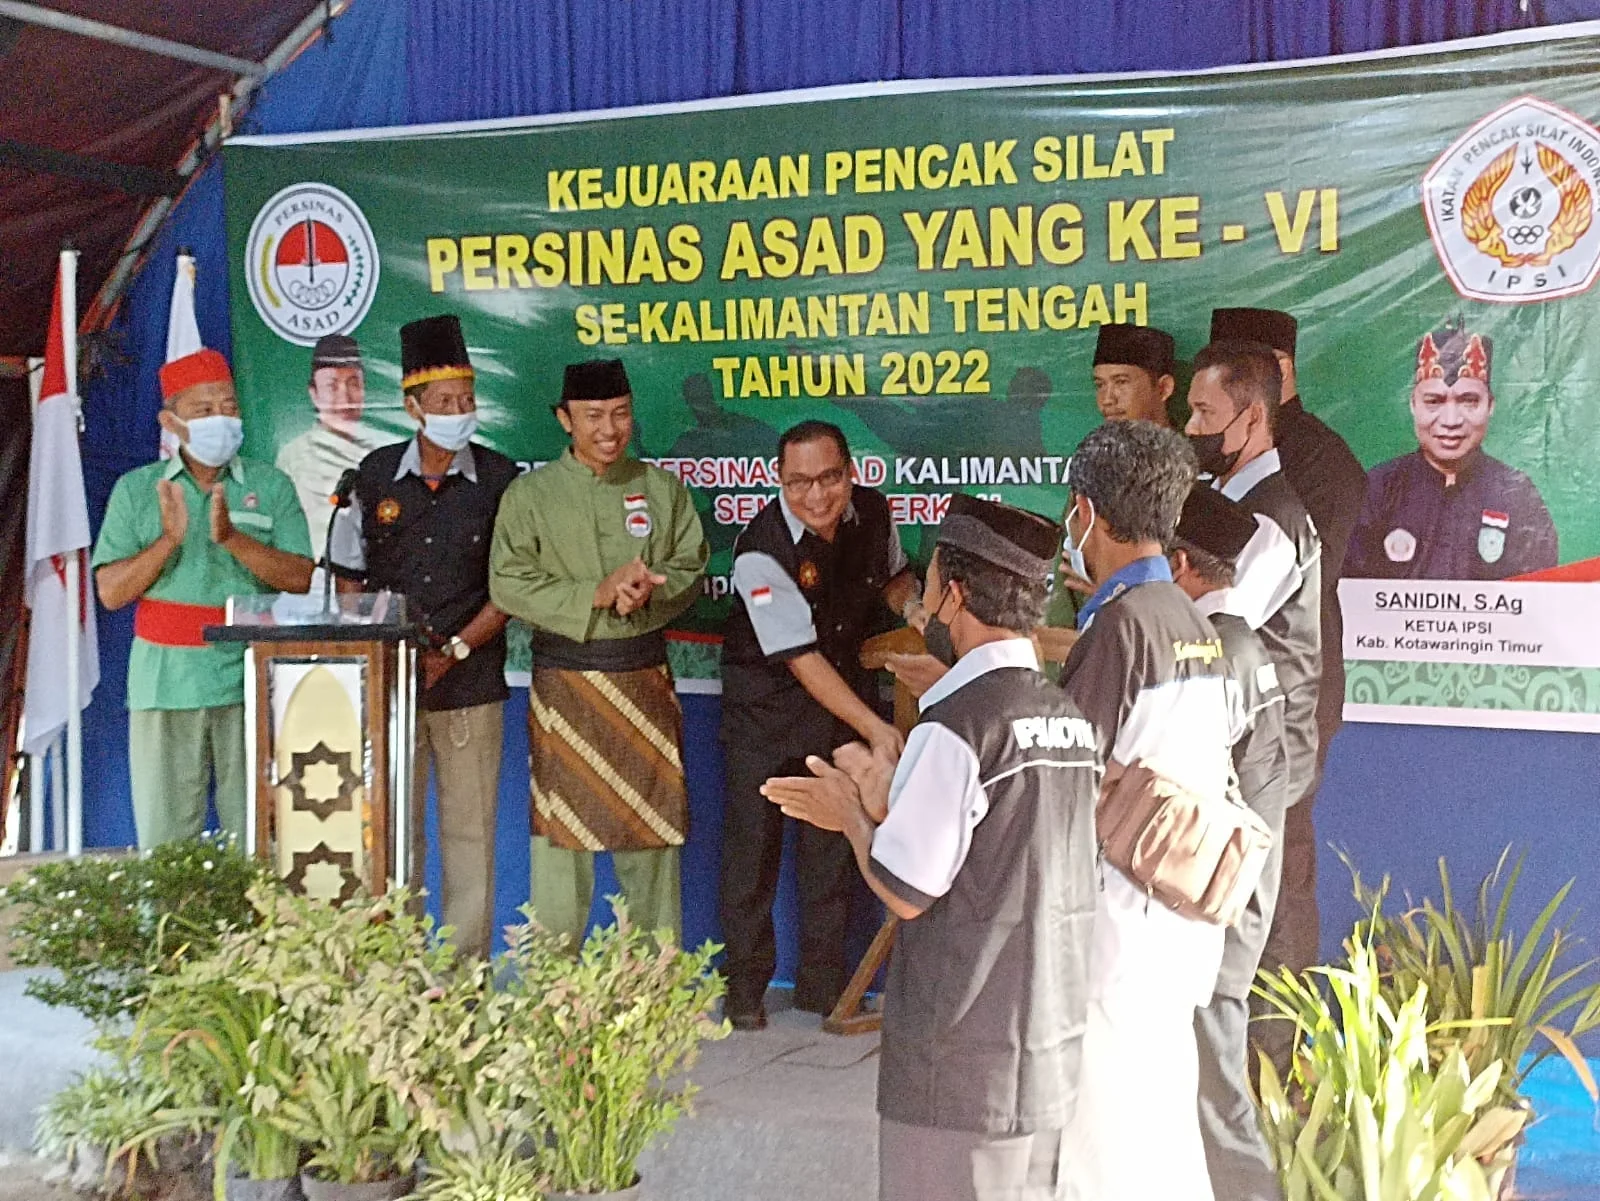 Ketua IPSI Kotim Apresiasi Kejurwil Persinas ASAD Kalimantan Tengah